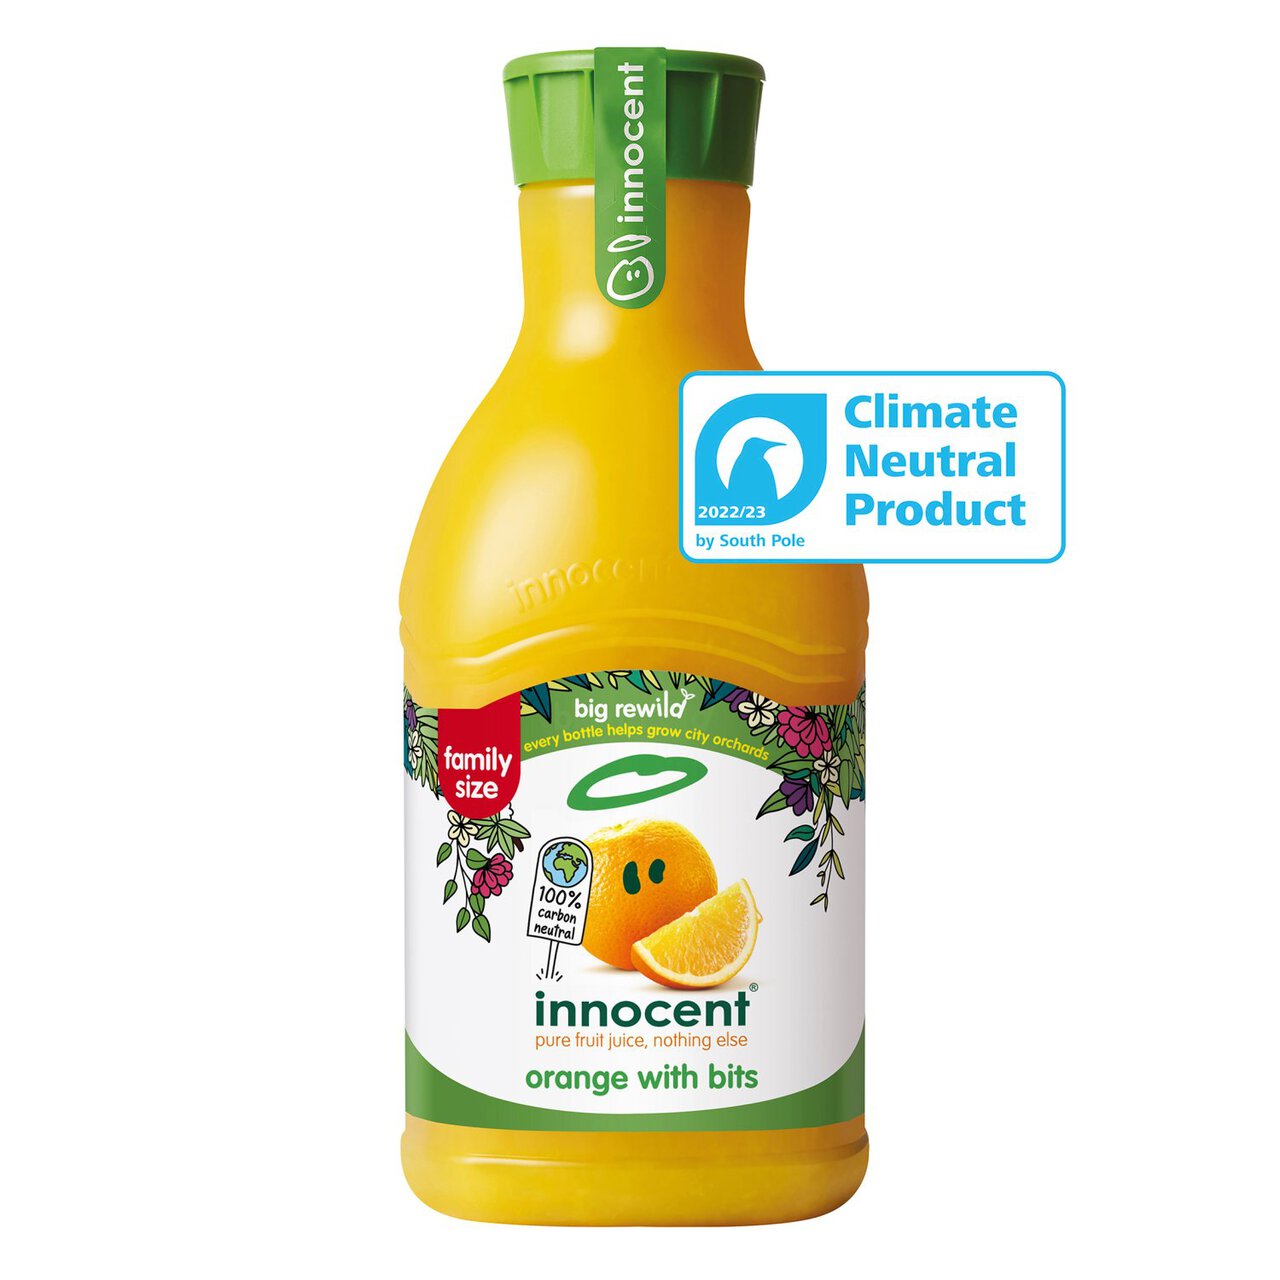 Innocent Orange Juice with Bits 1.35l